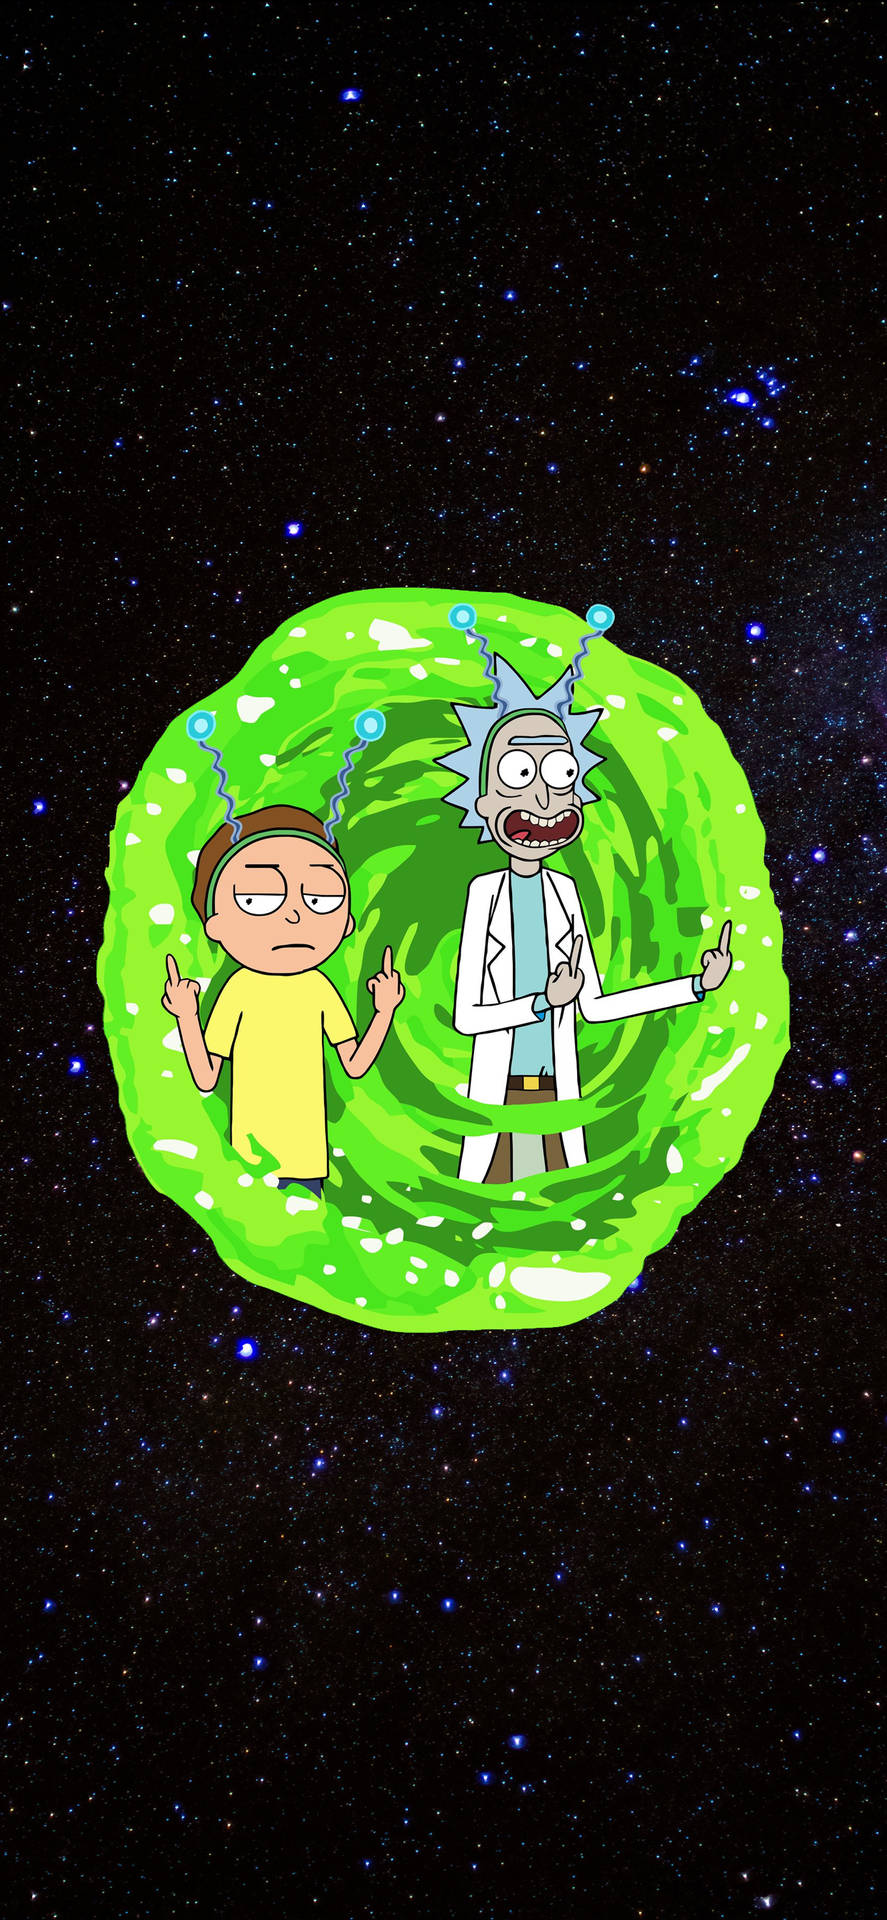 Funny Portal Rick And Morty Phone Wallpaper